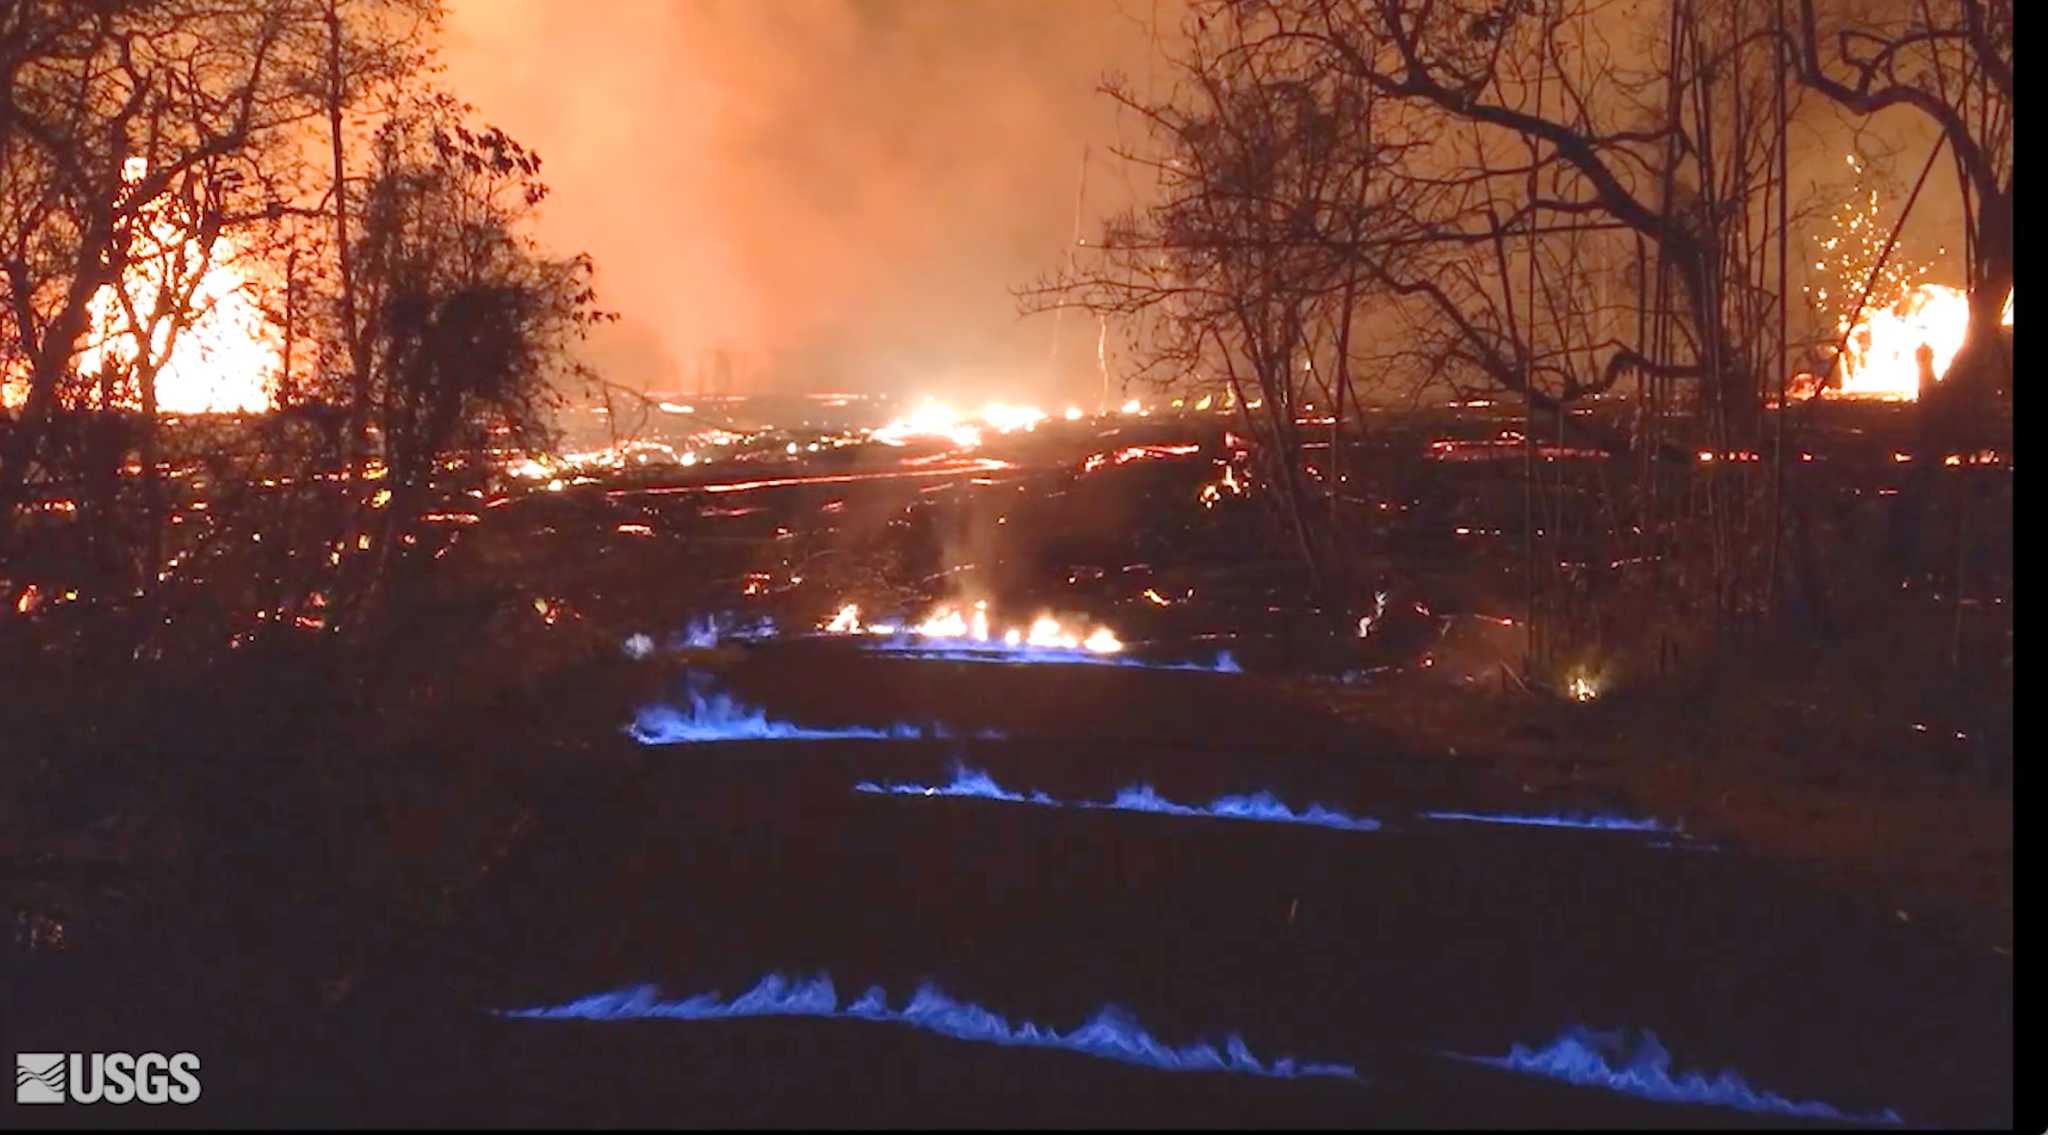 Hawaii volcano generates blue flames from burning methane - Houston ...